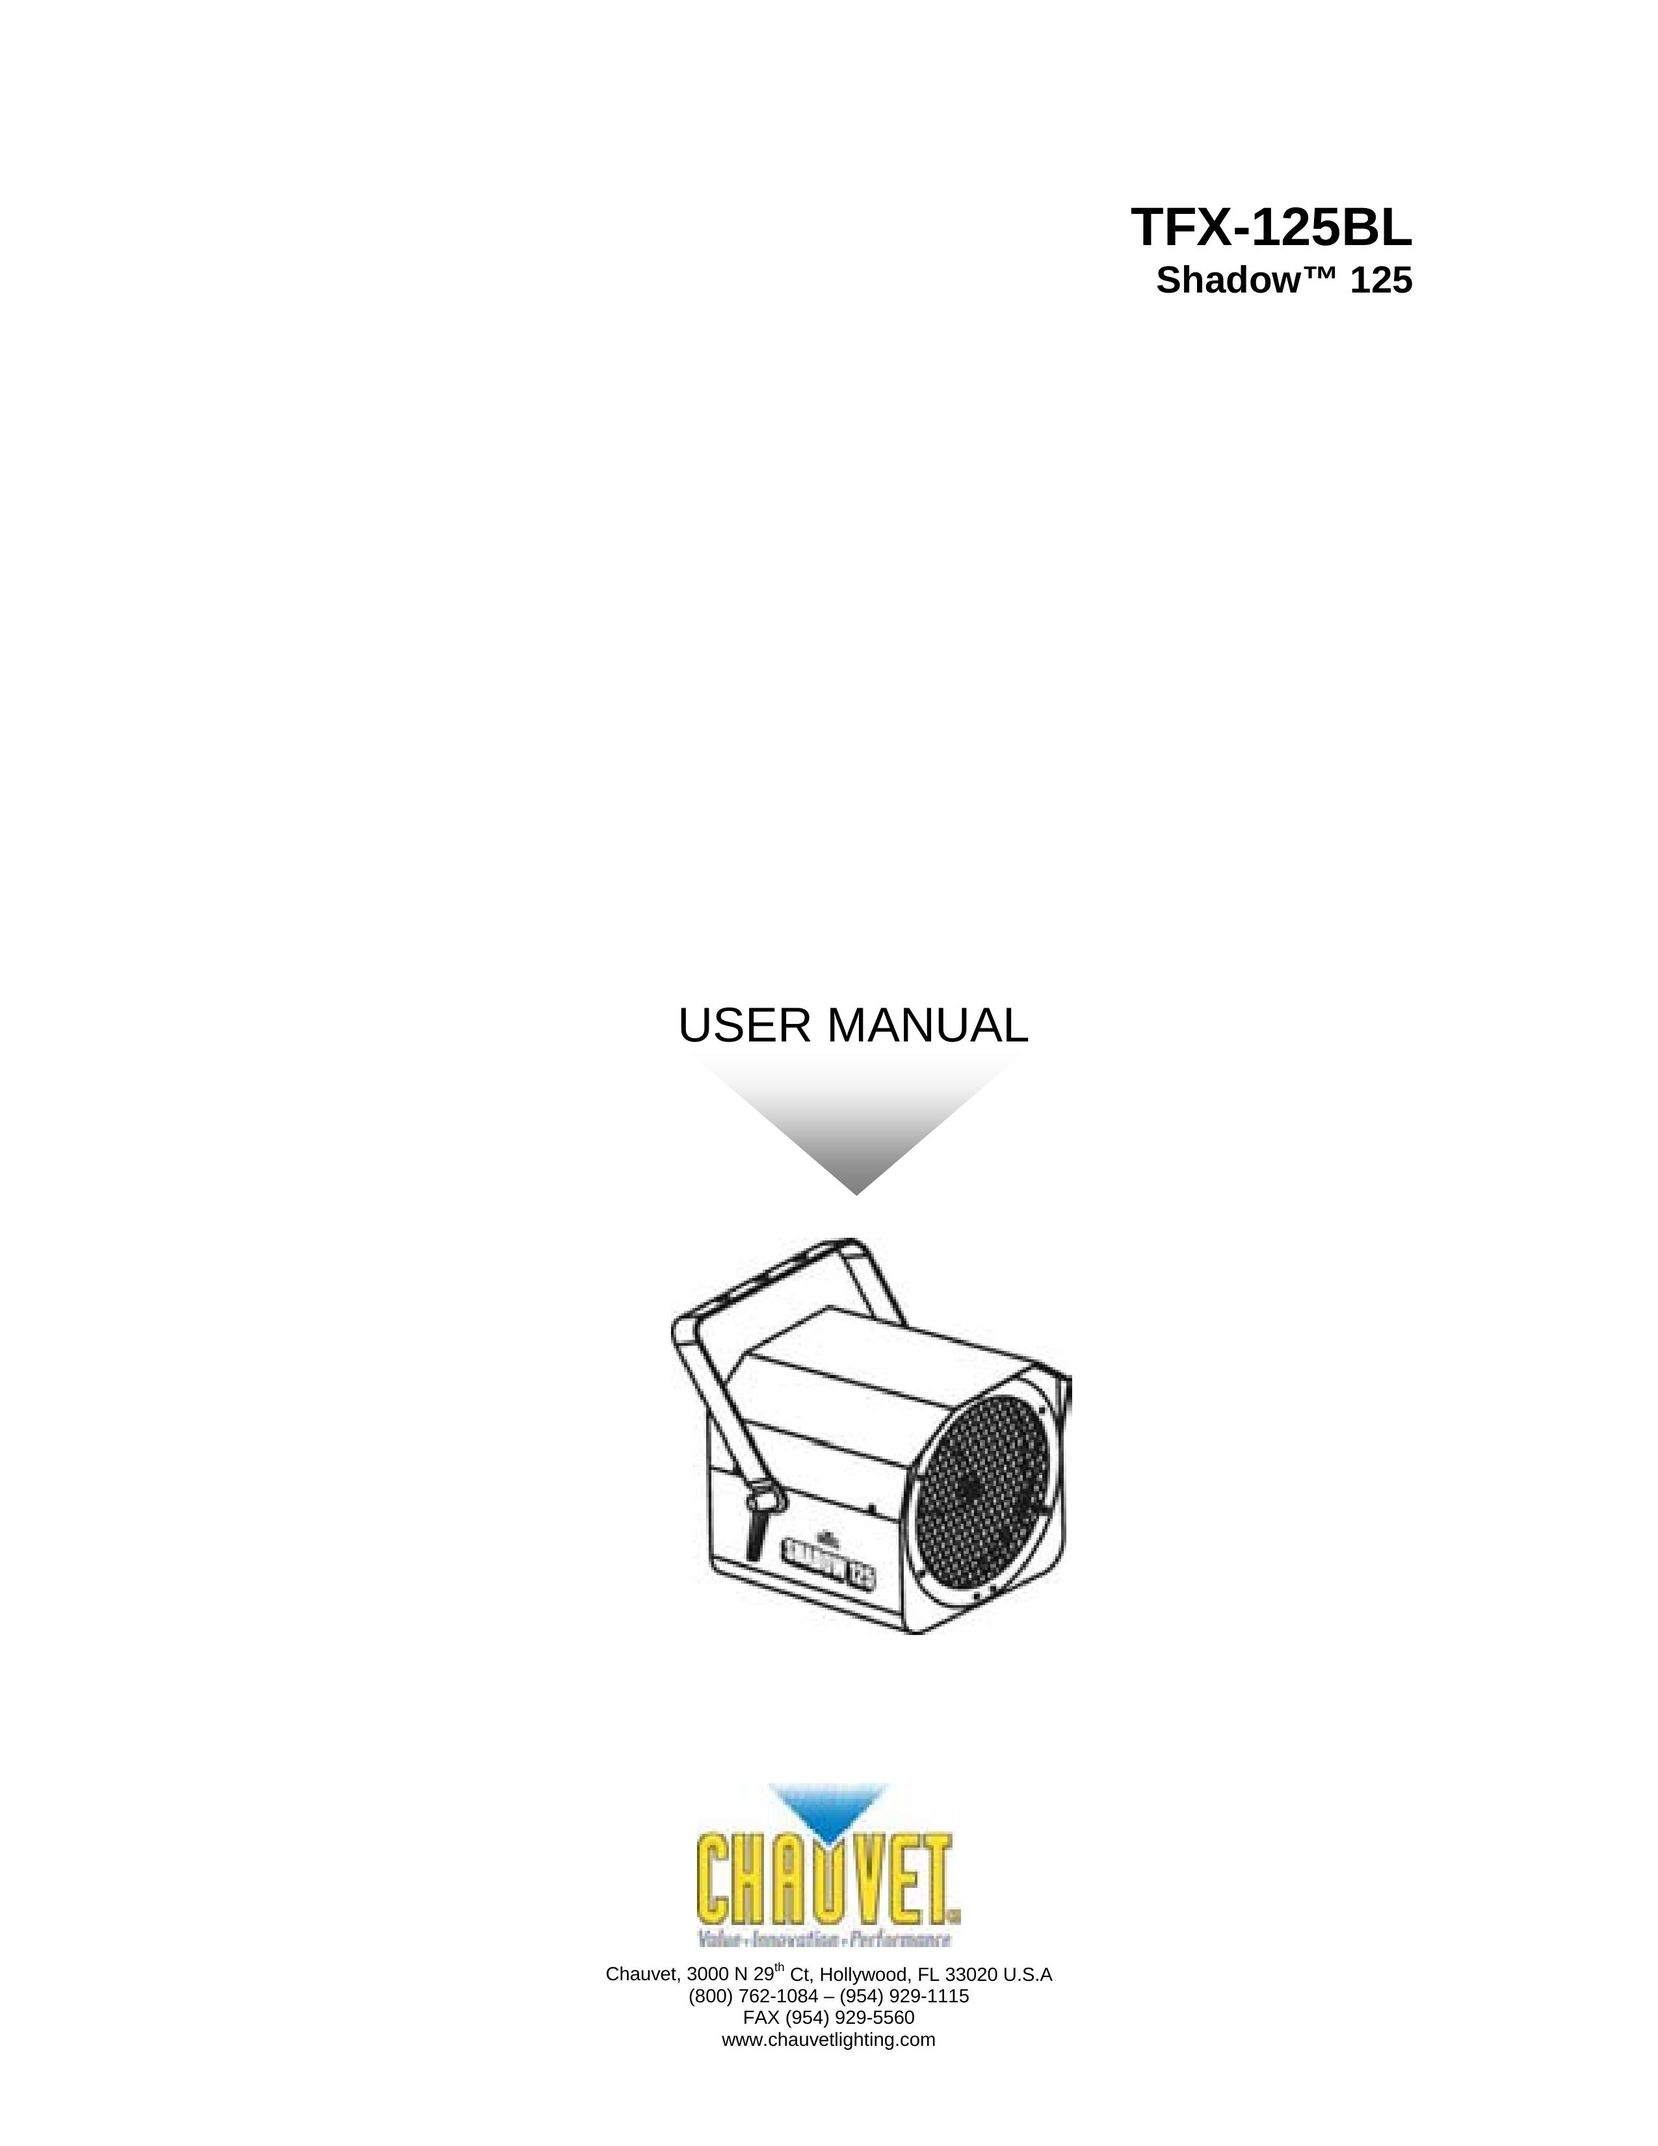 Chauvet TFX- 125BL Indoor Furnishings User Manual